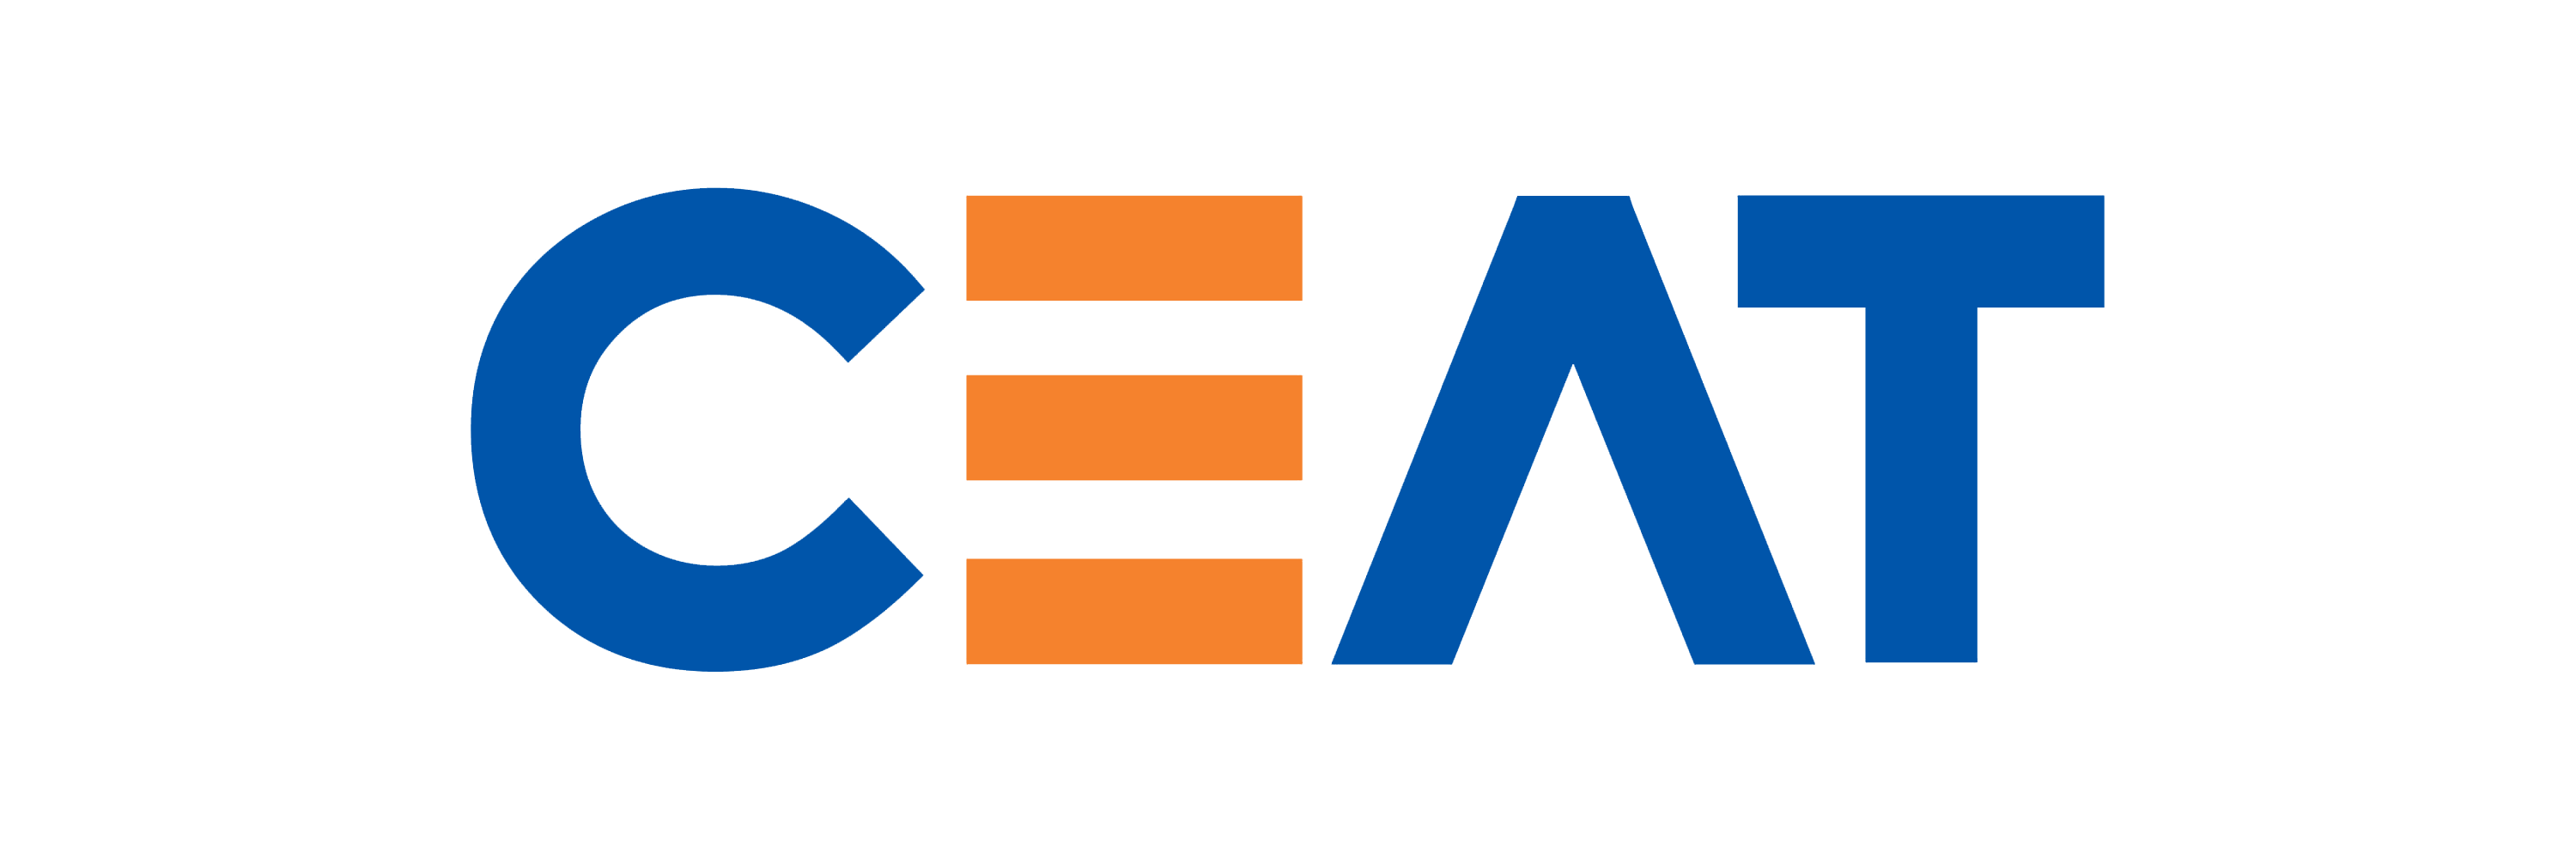 ceat logo new